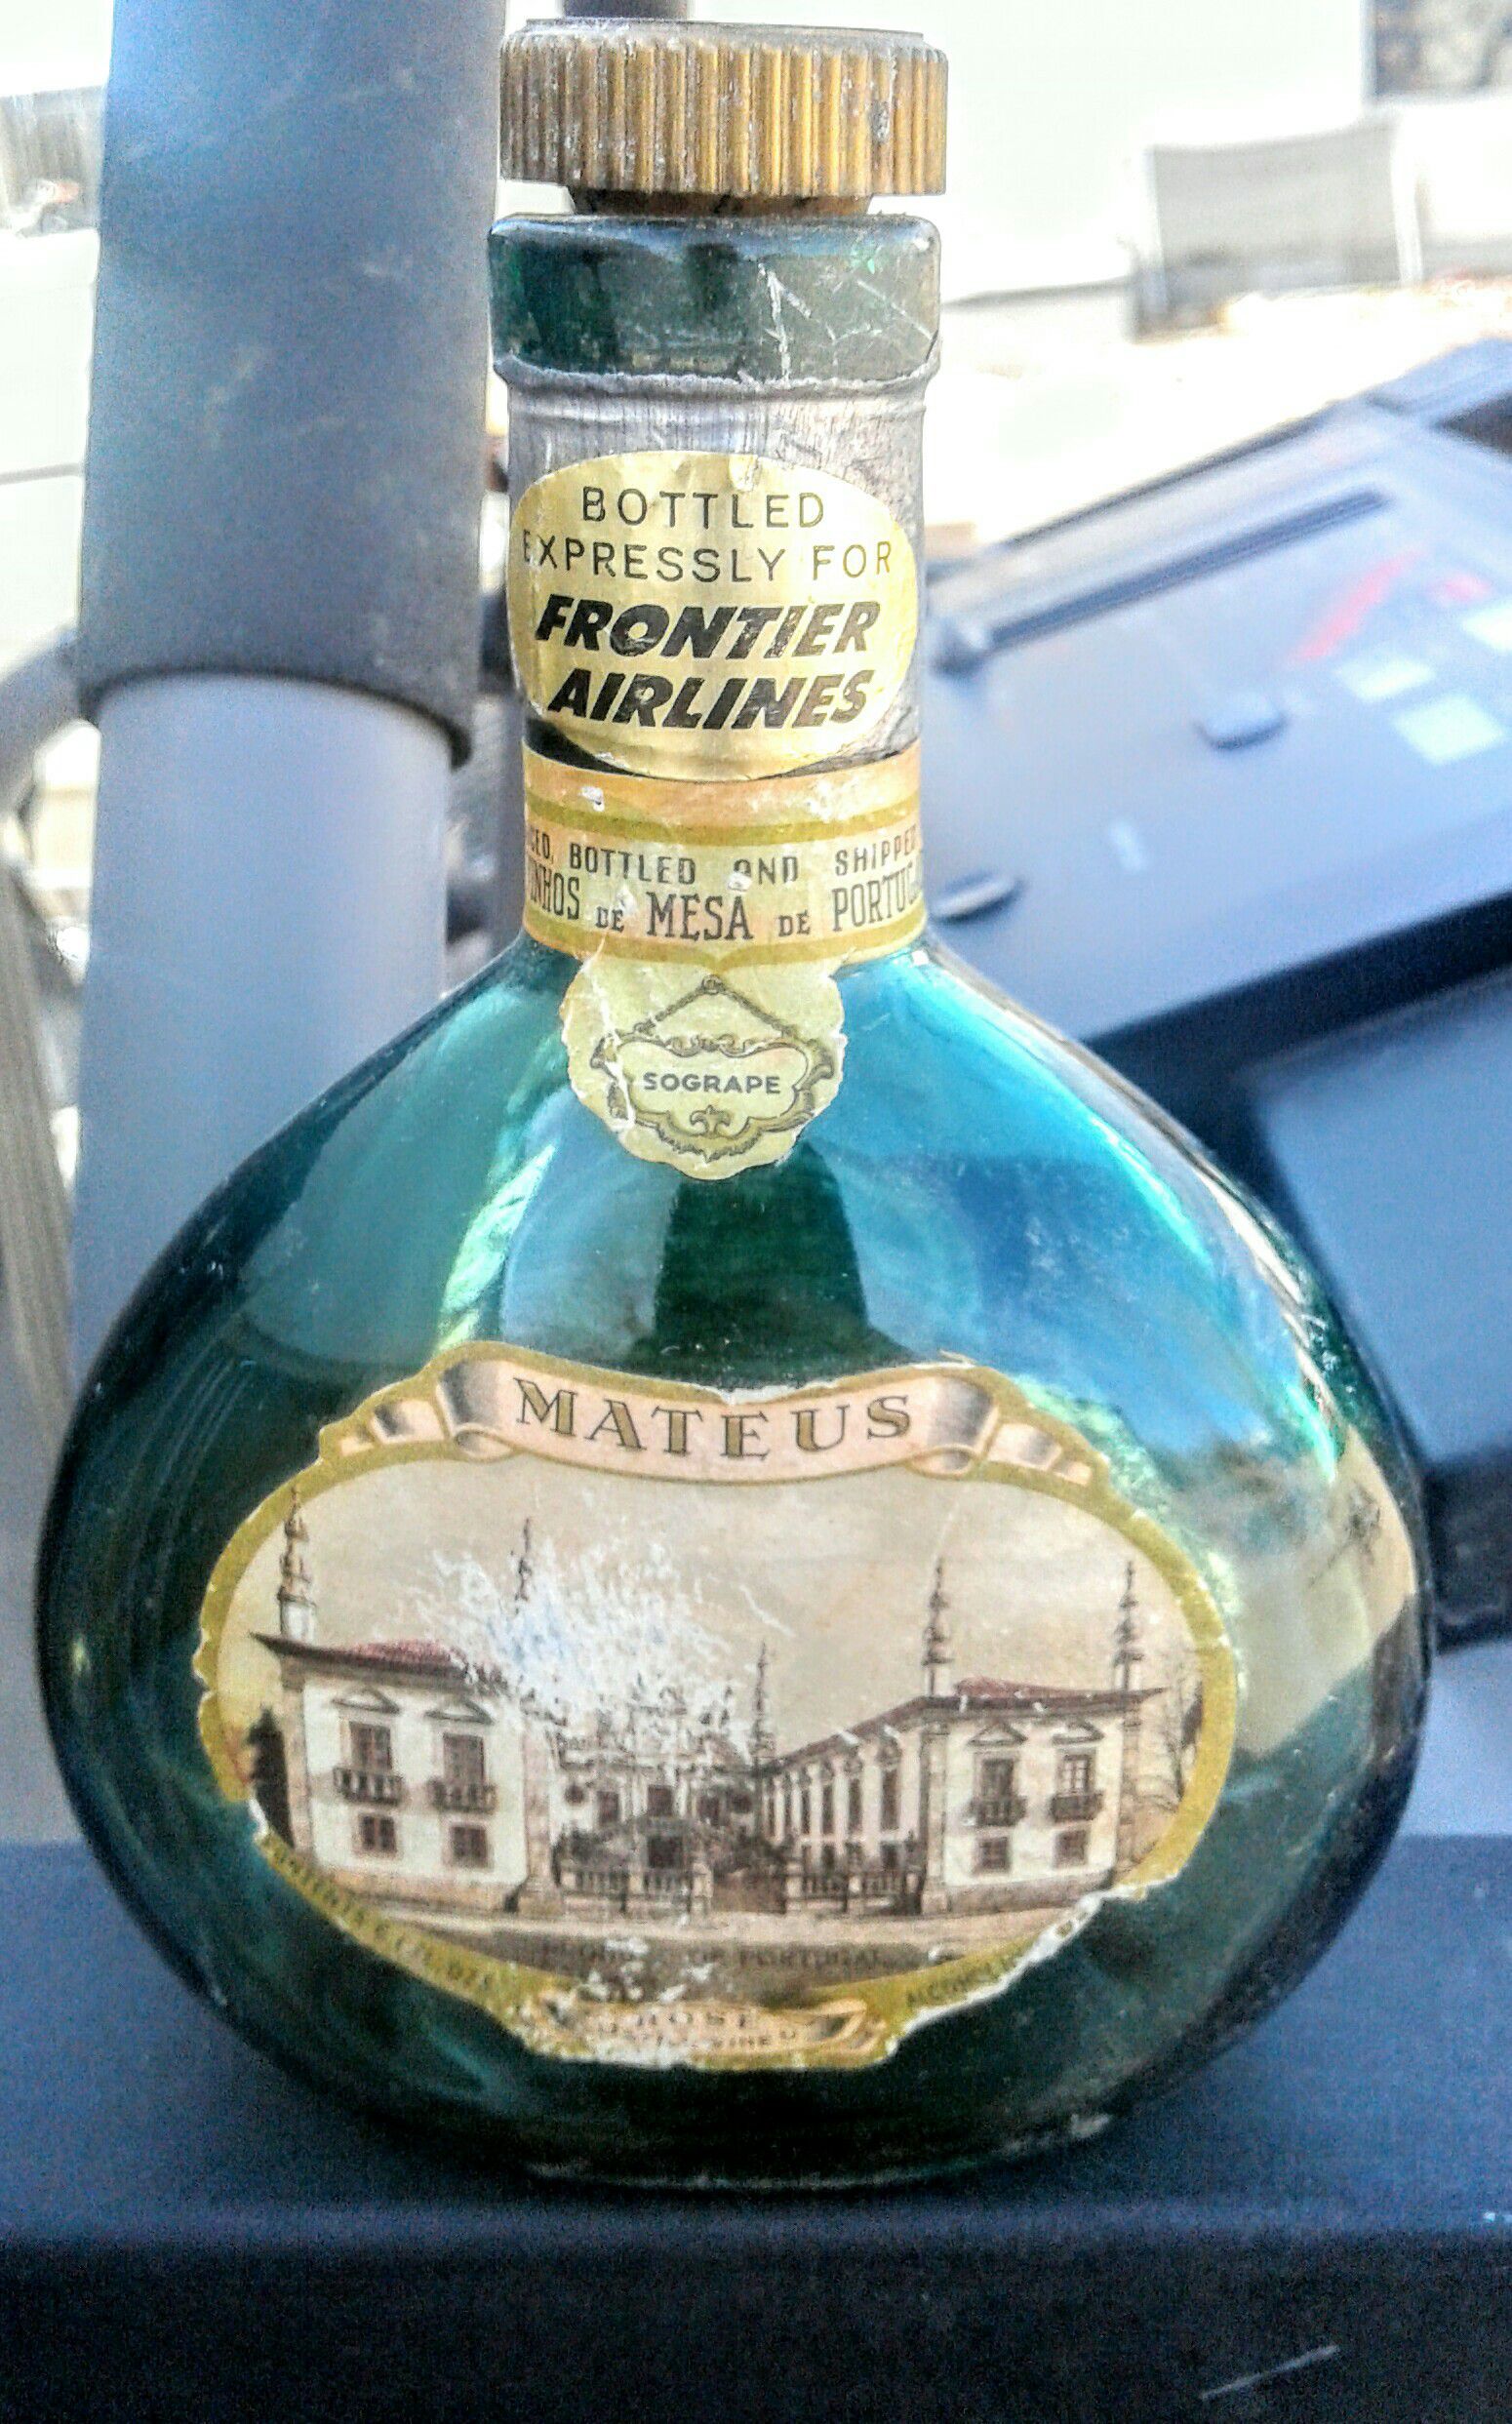 Antique Frontier Airlines wine bottle